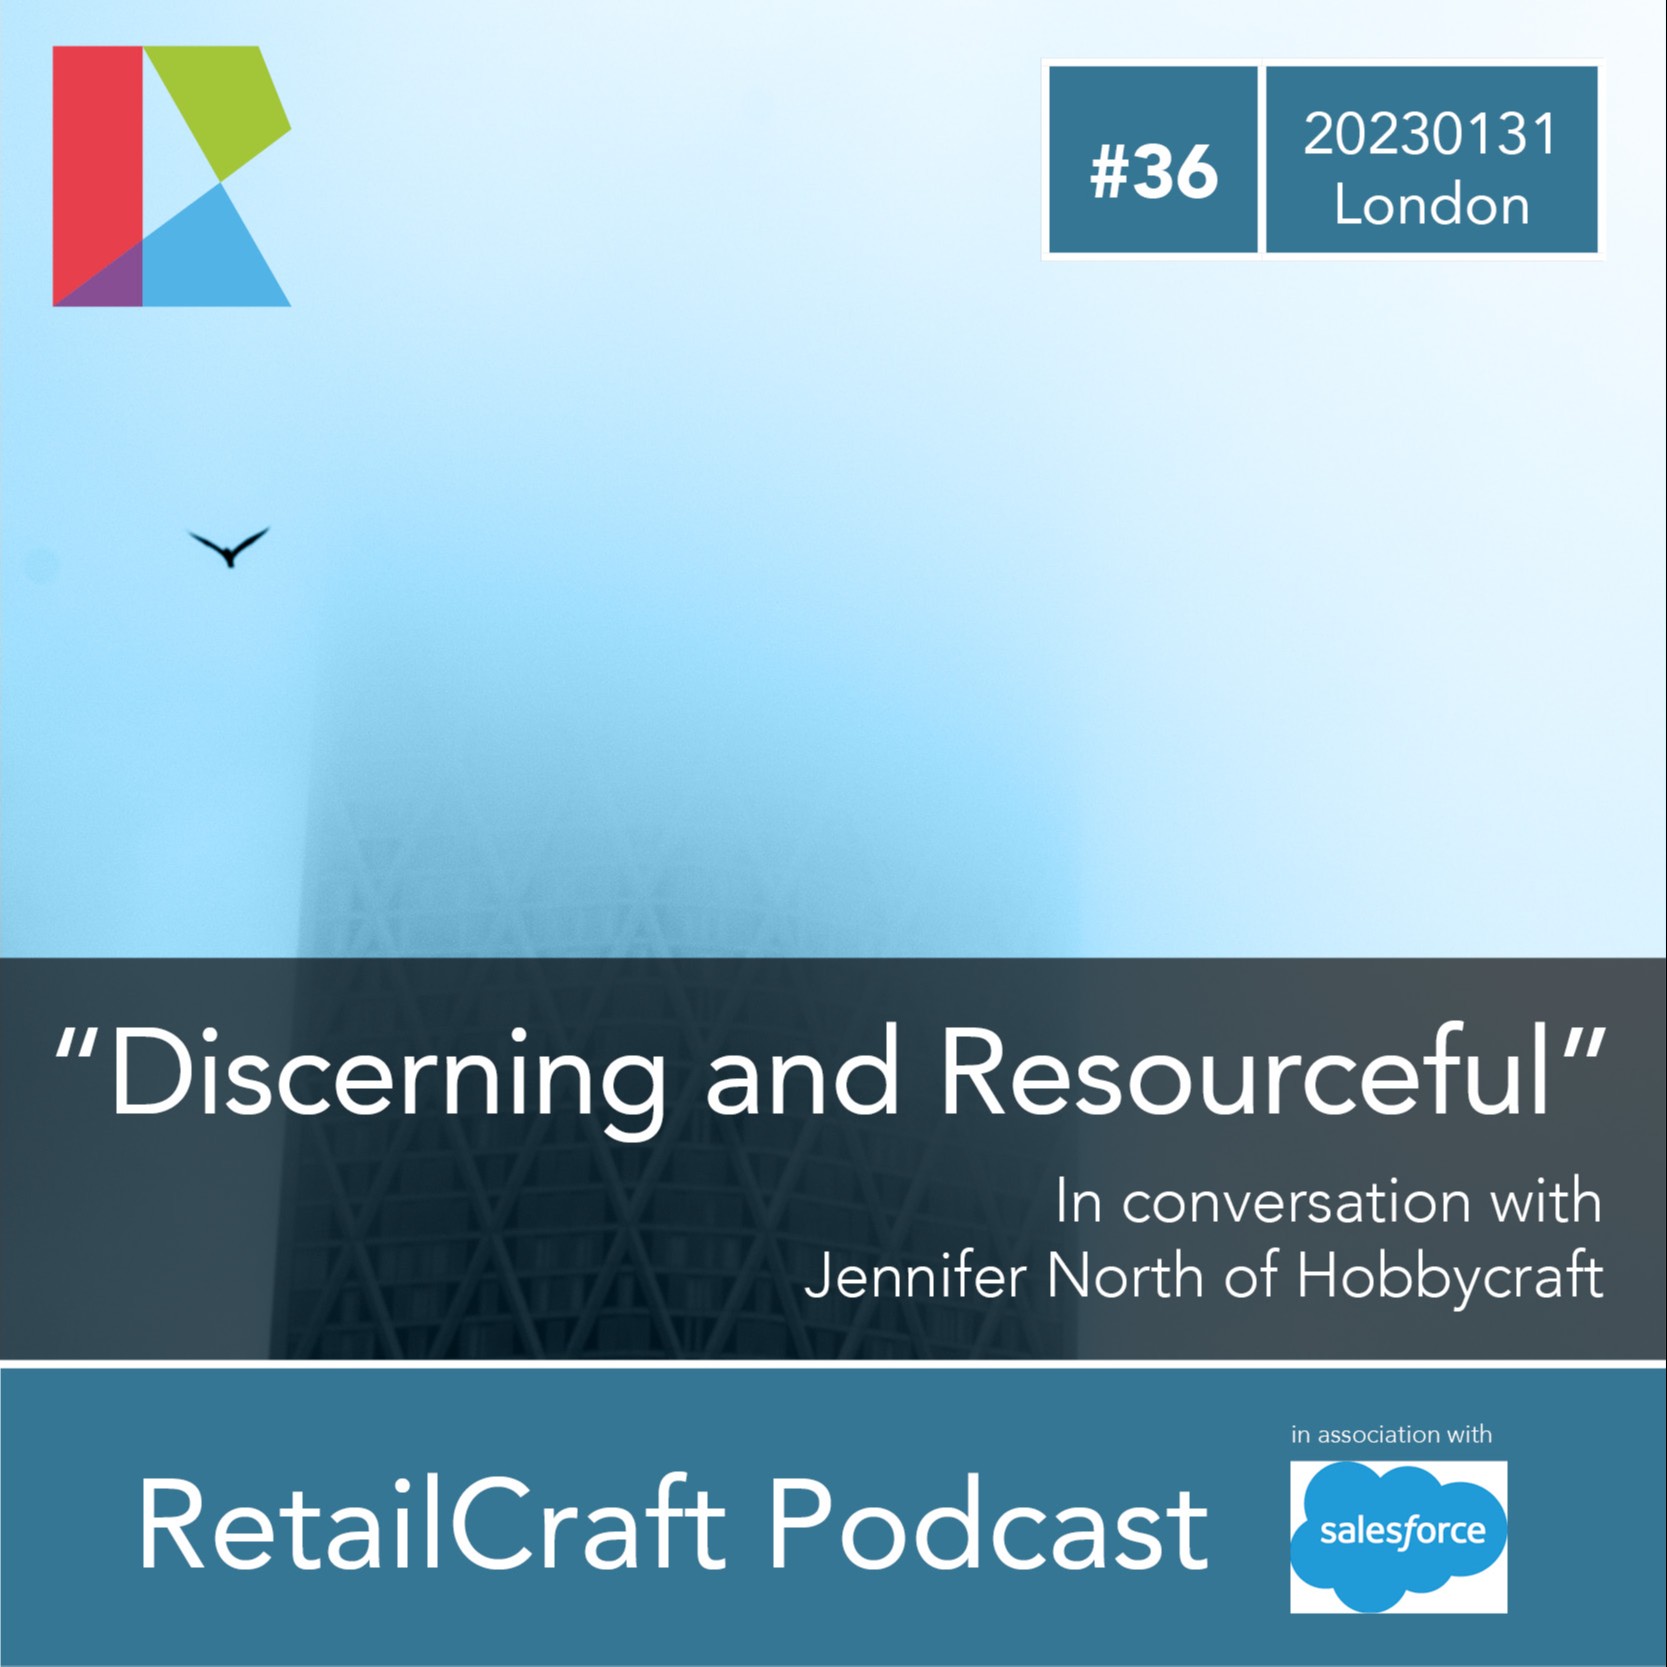 RetailCraft 36 - ”Discerning and Resourceful” - Jennifer North of Hobbycraft